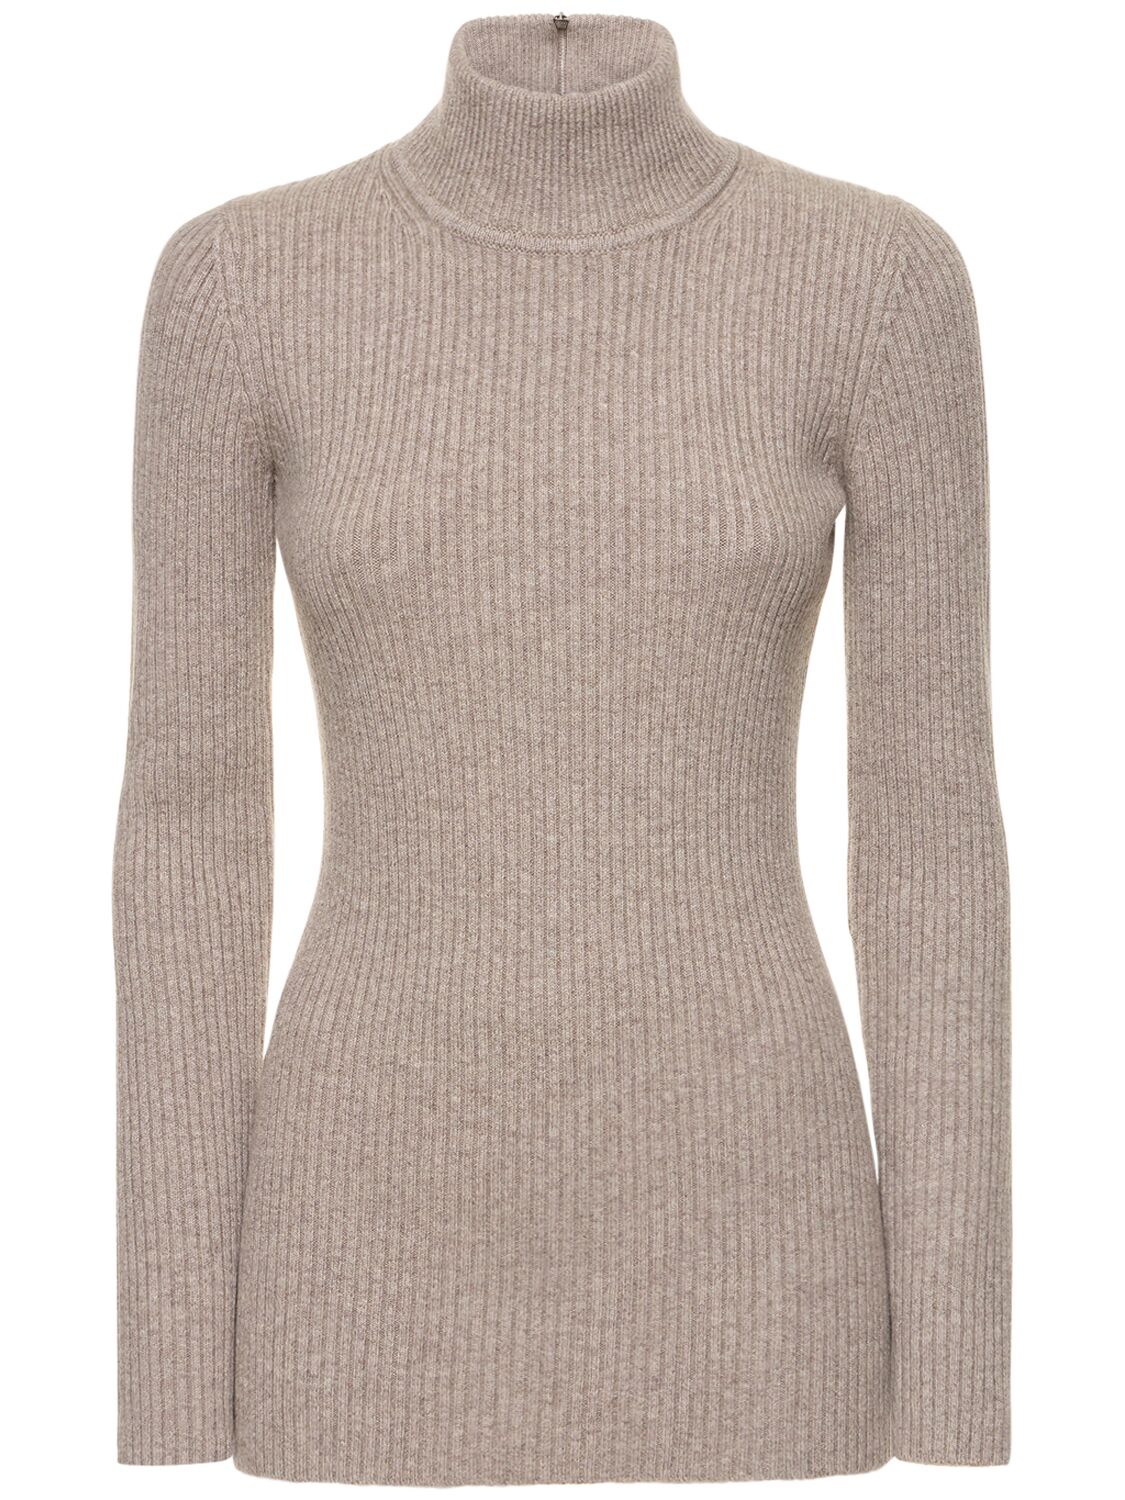 Michael Kors Cashmere Blend Knit Turtleneck Sweater In Grey